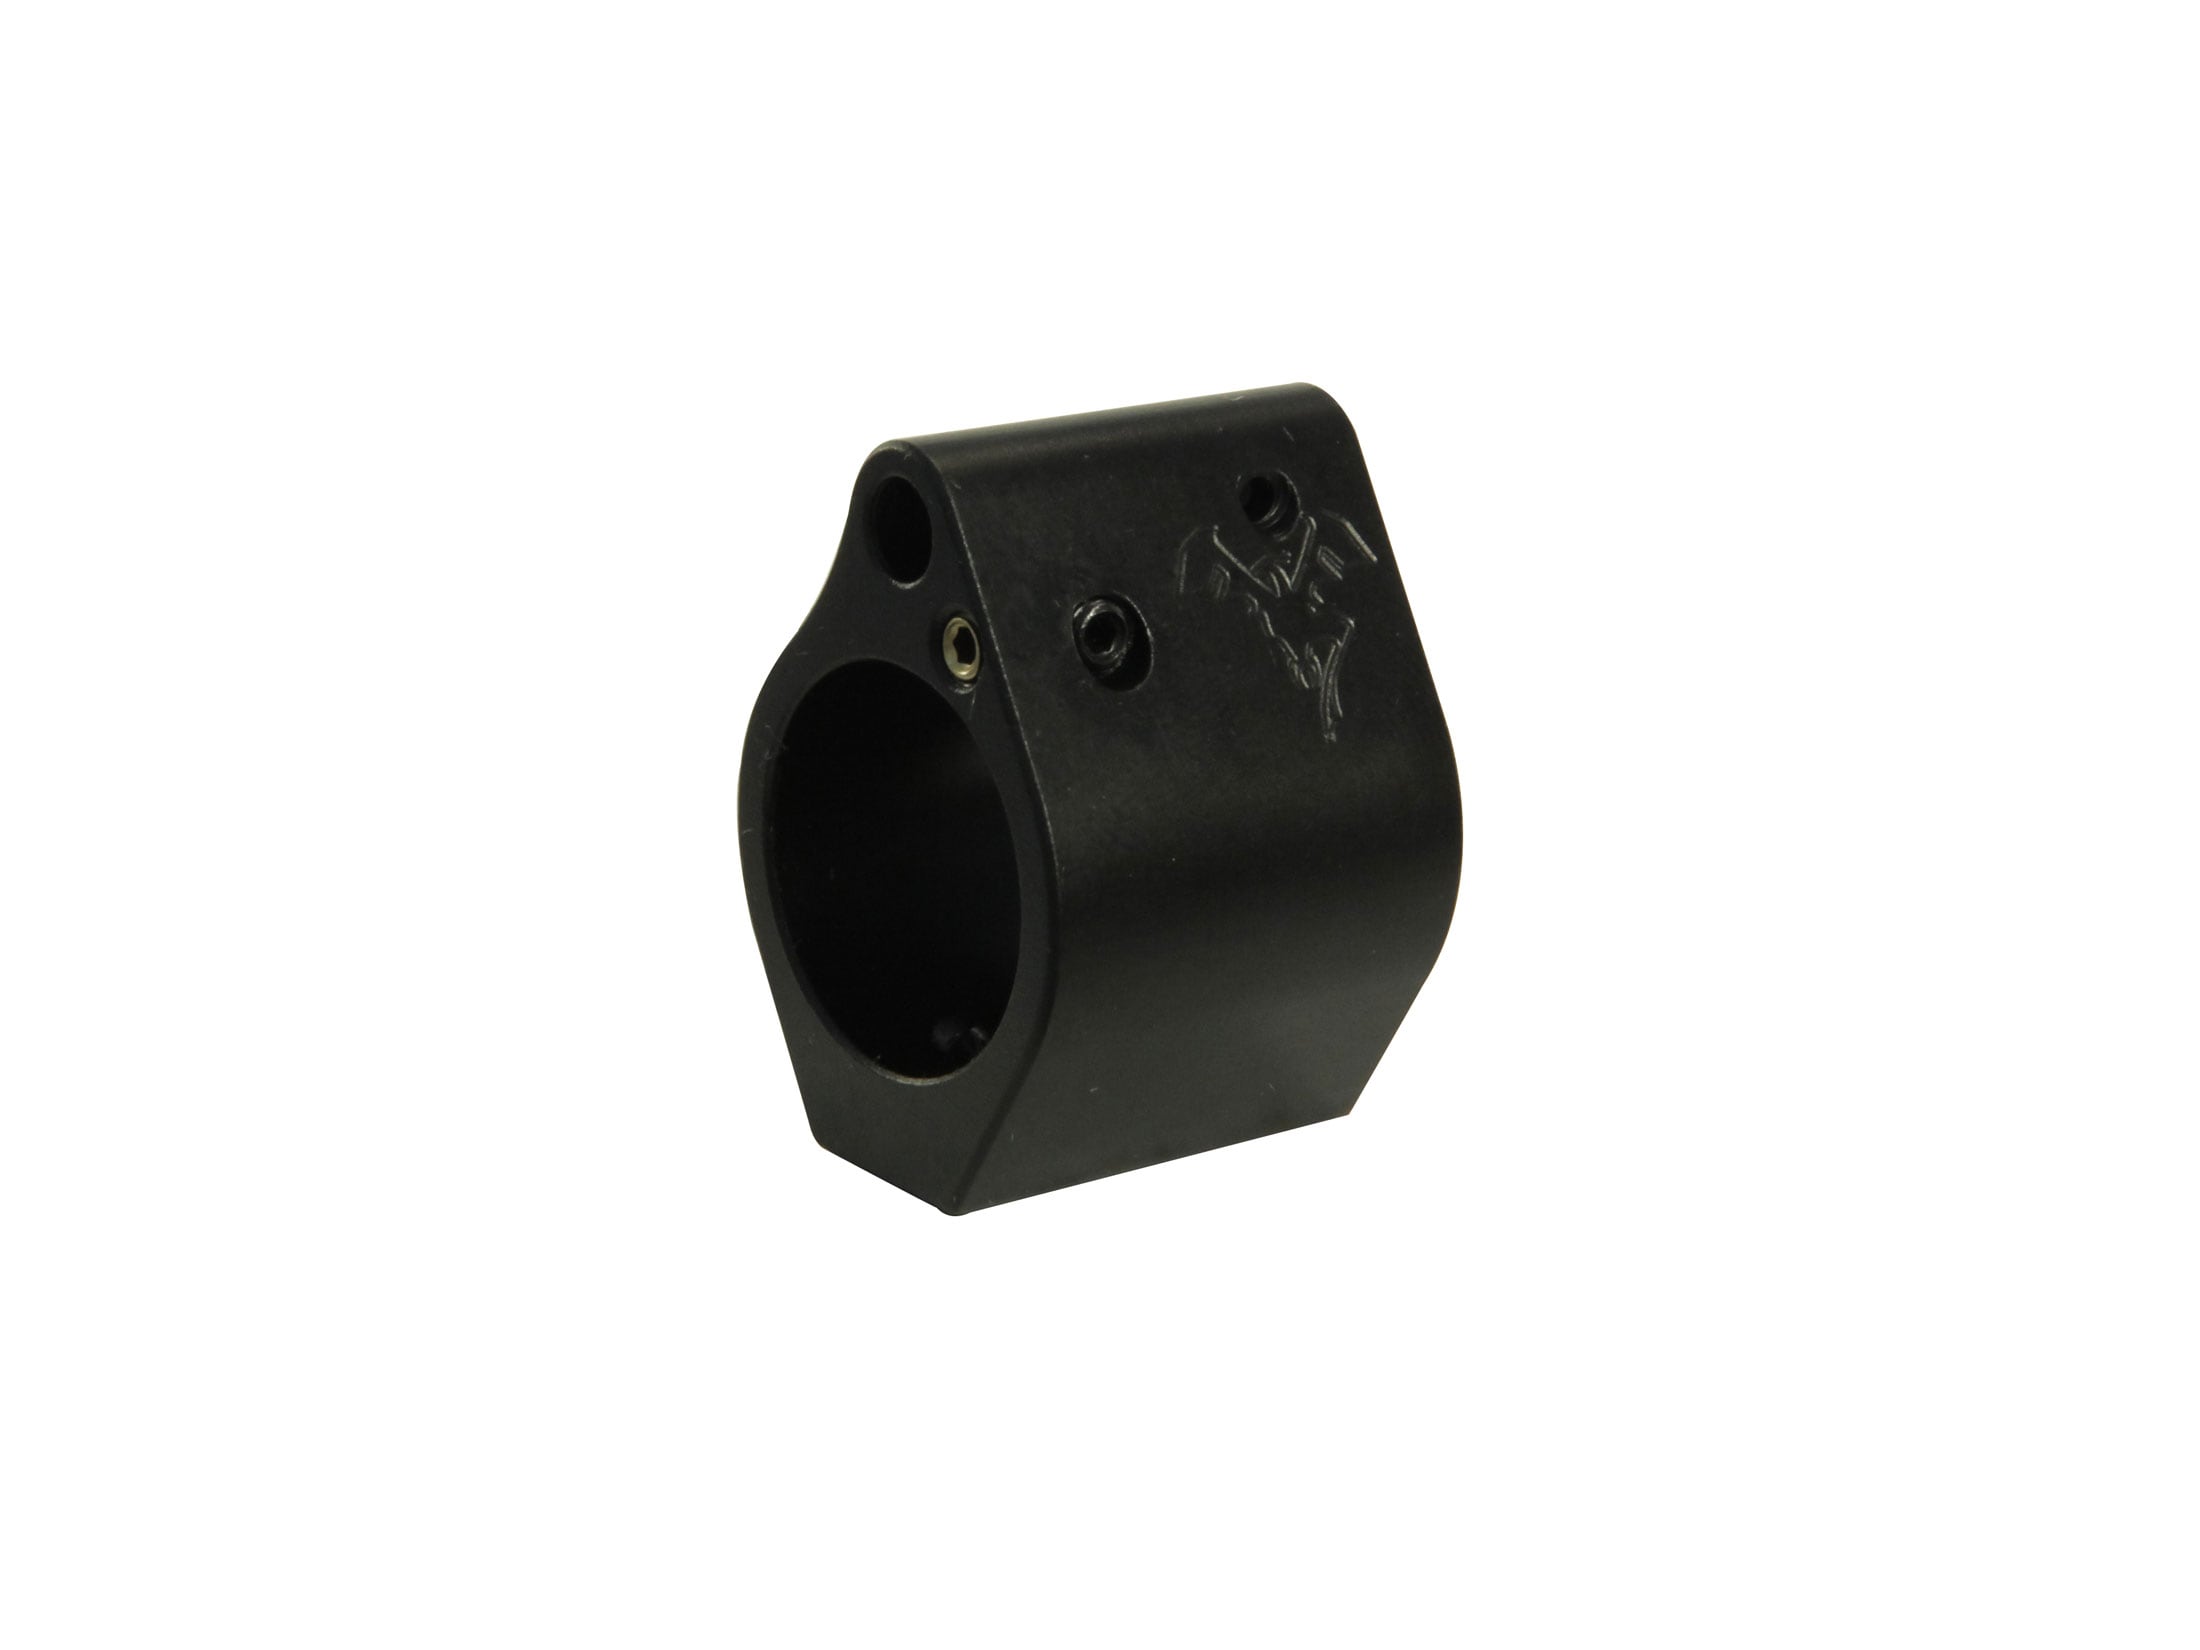 ERGO 45/90 Ambidextrous Safety Selector AR-15, LR-308 Steel Black